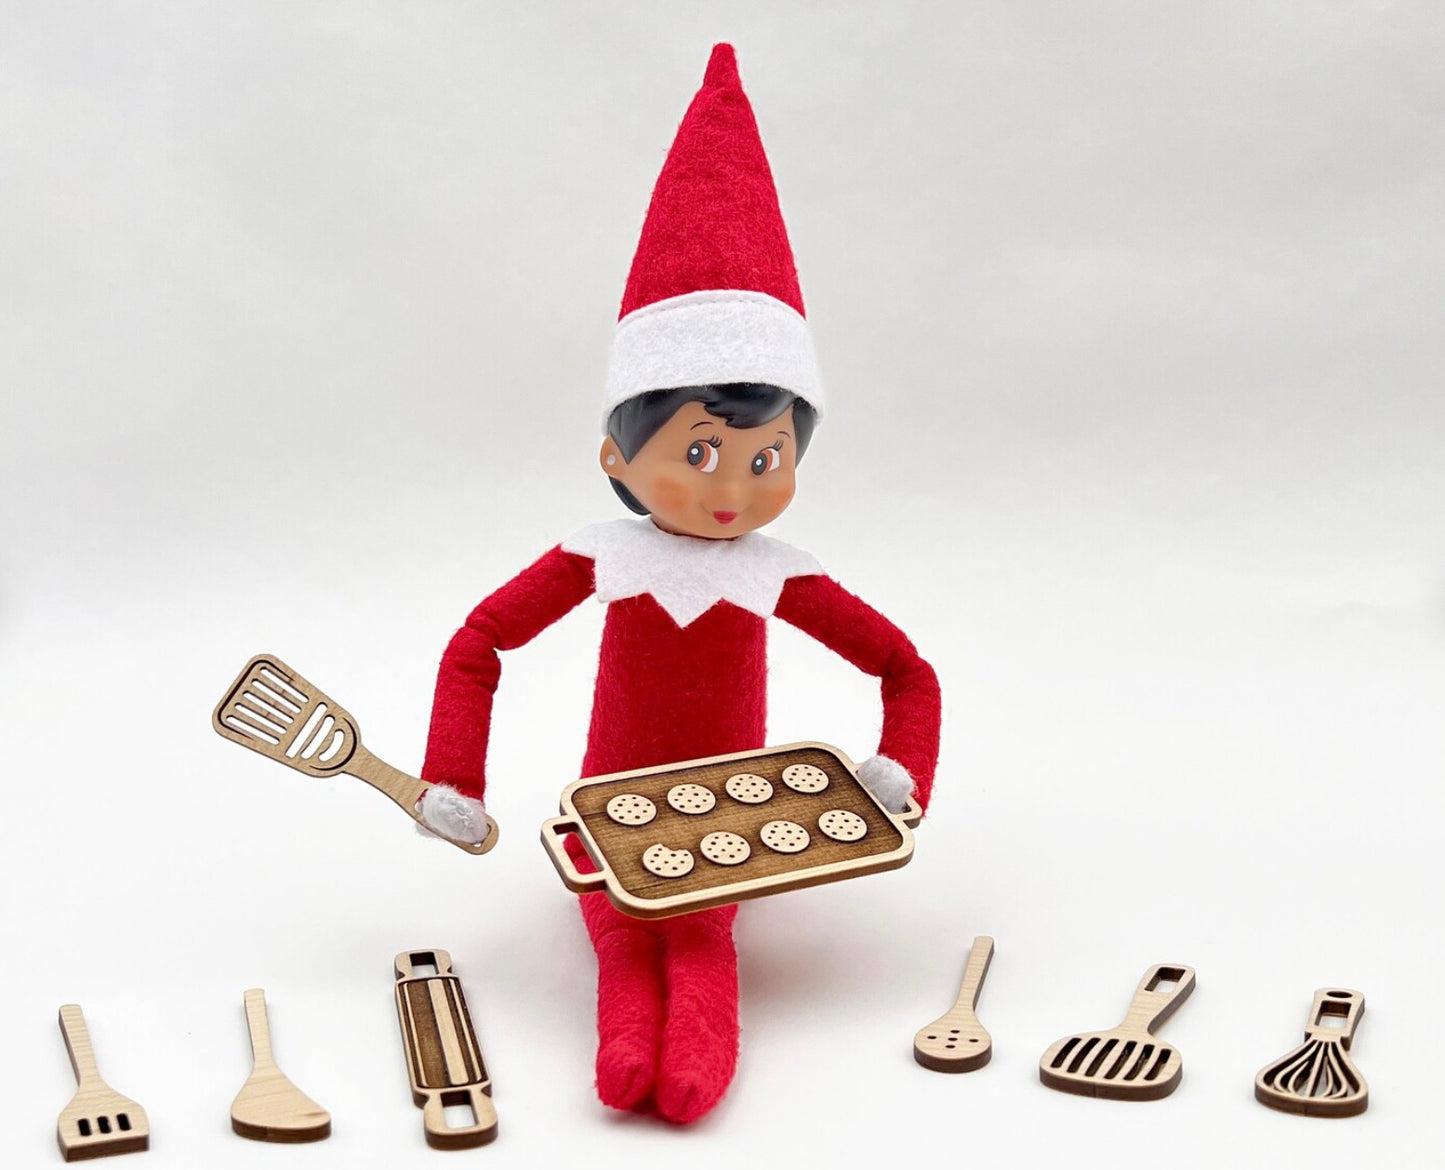 Christmas Elf Kit #8 - Christmas Elf Baking Kit card (Ready to Paint)